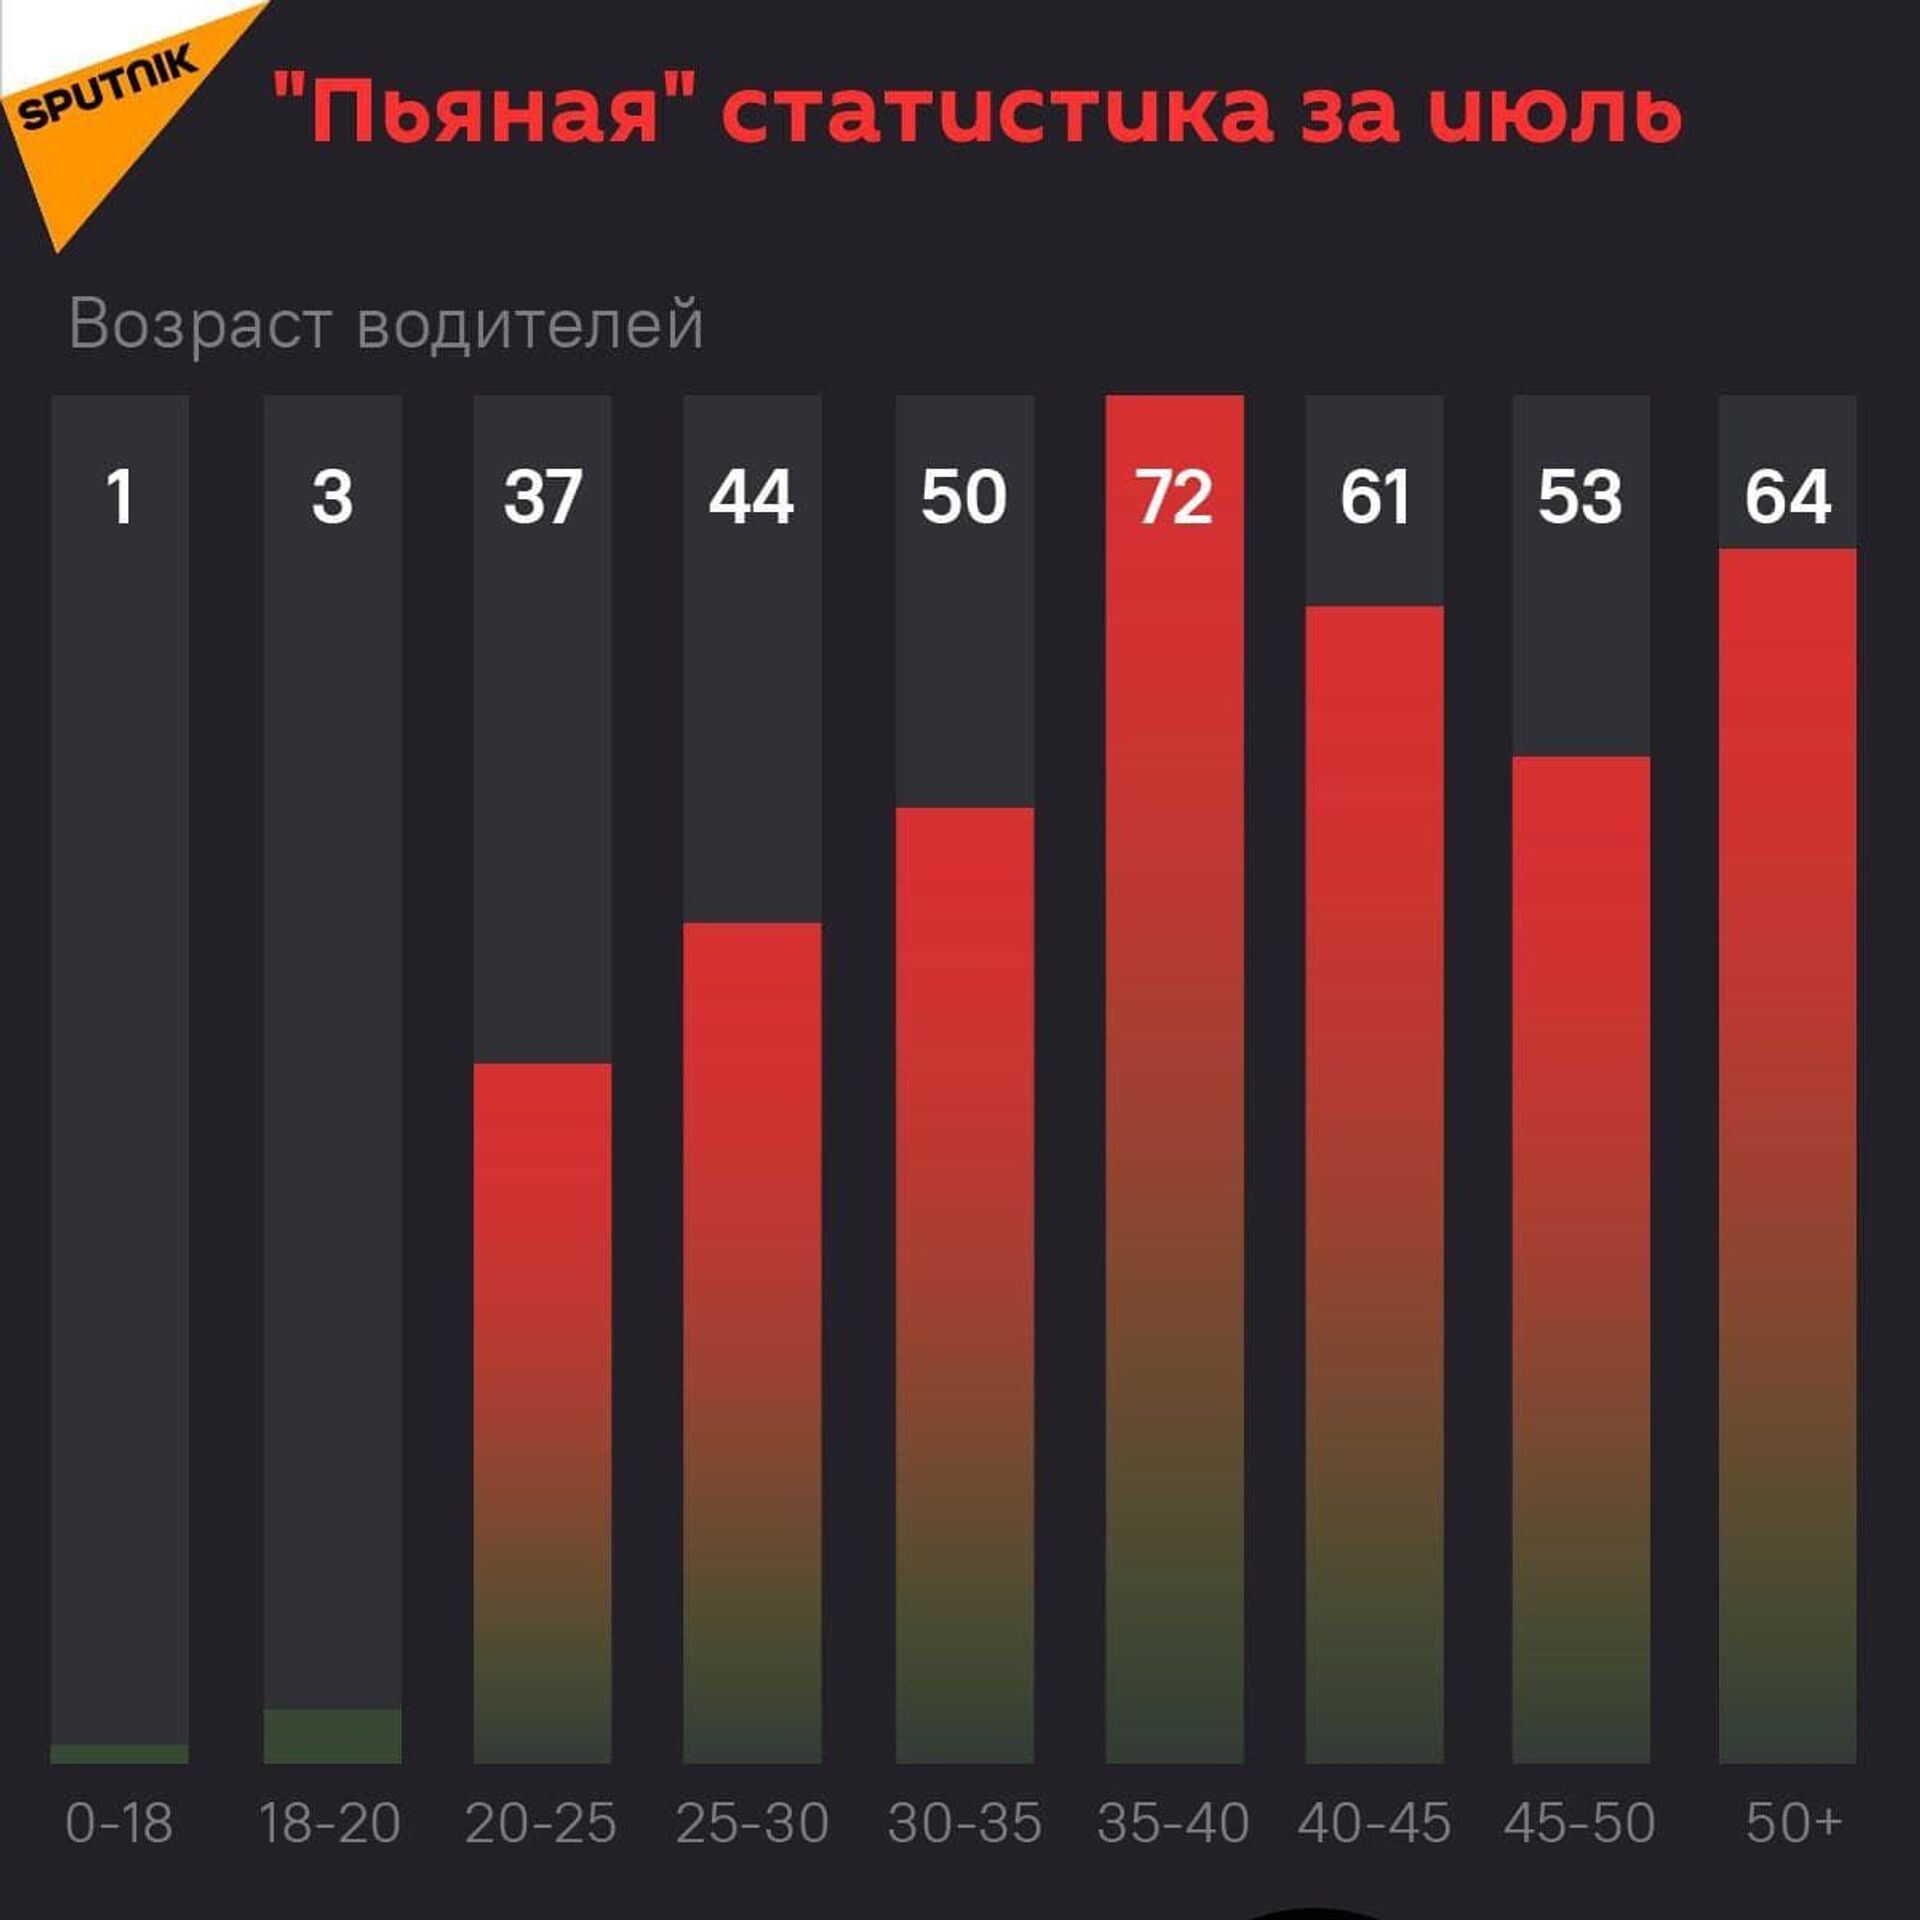 Пьяная статистика на июль месяц  - Sputnik Абхазия, 1920, 12.10.2021